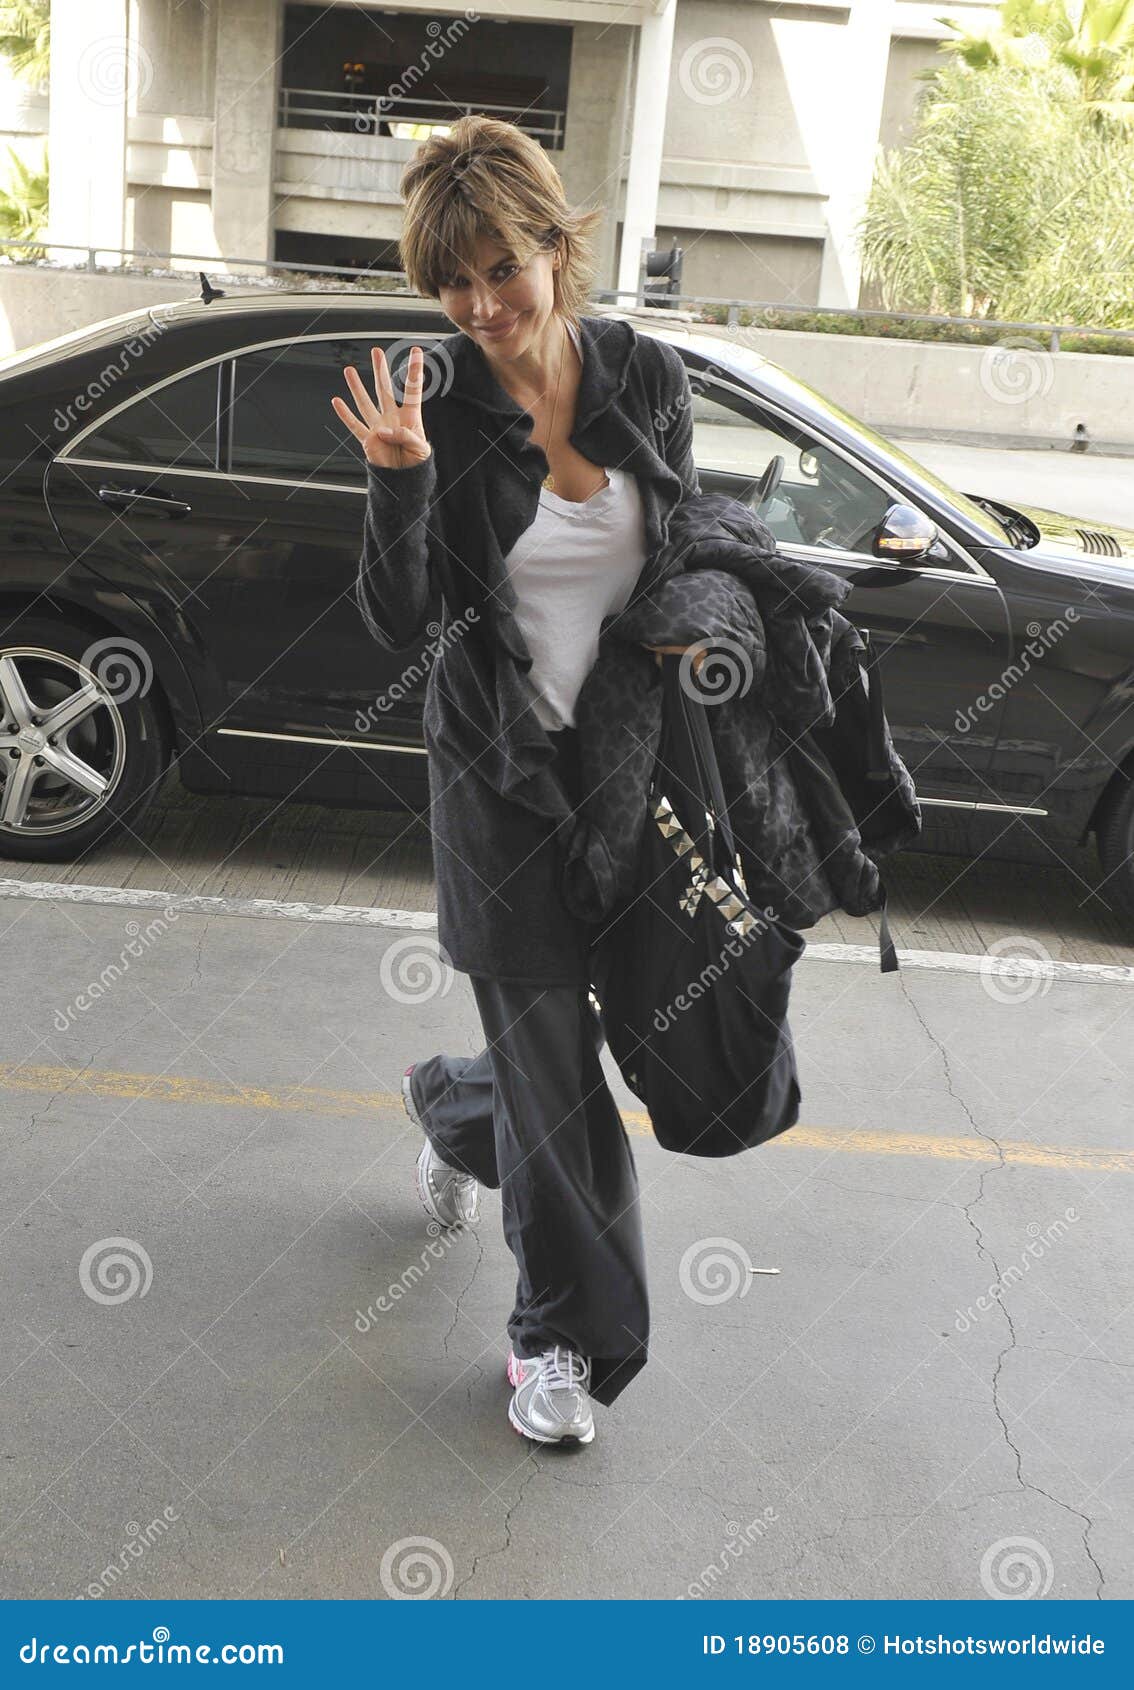 Actress Lisa Rinna is Seen at LAX Editorial Stock Photo - Image of